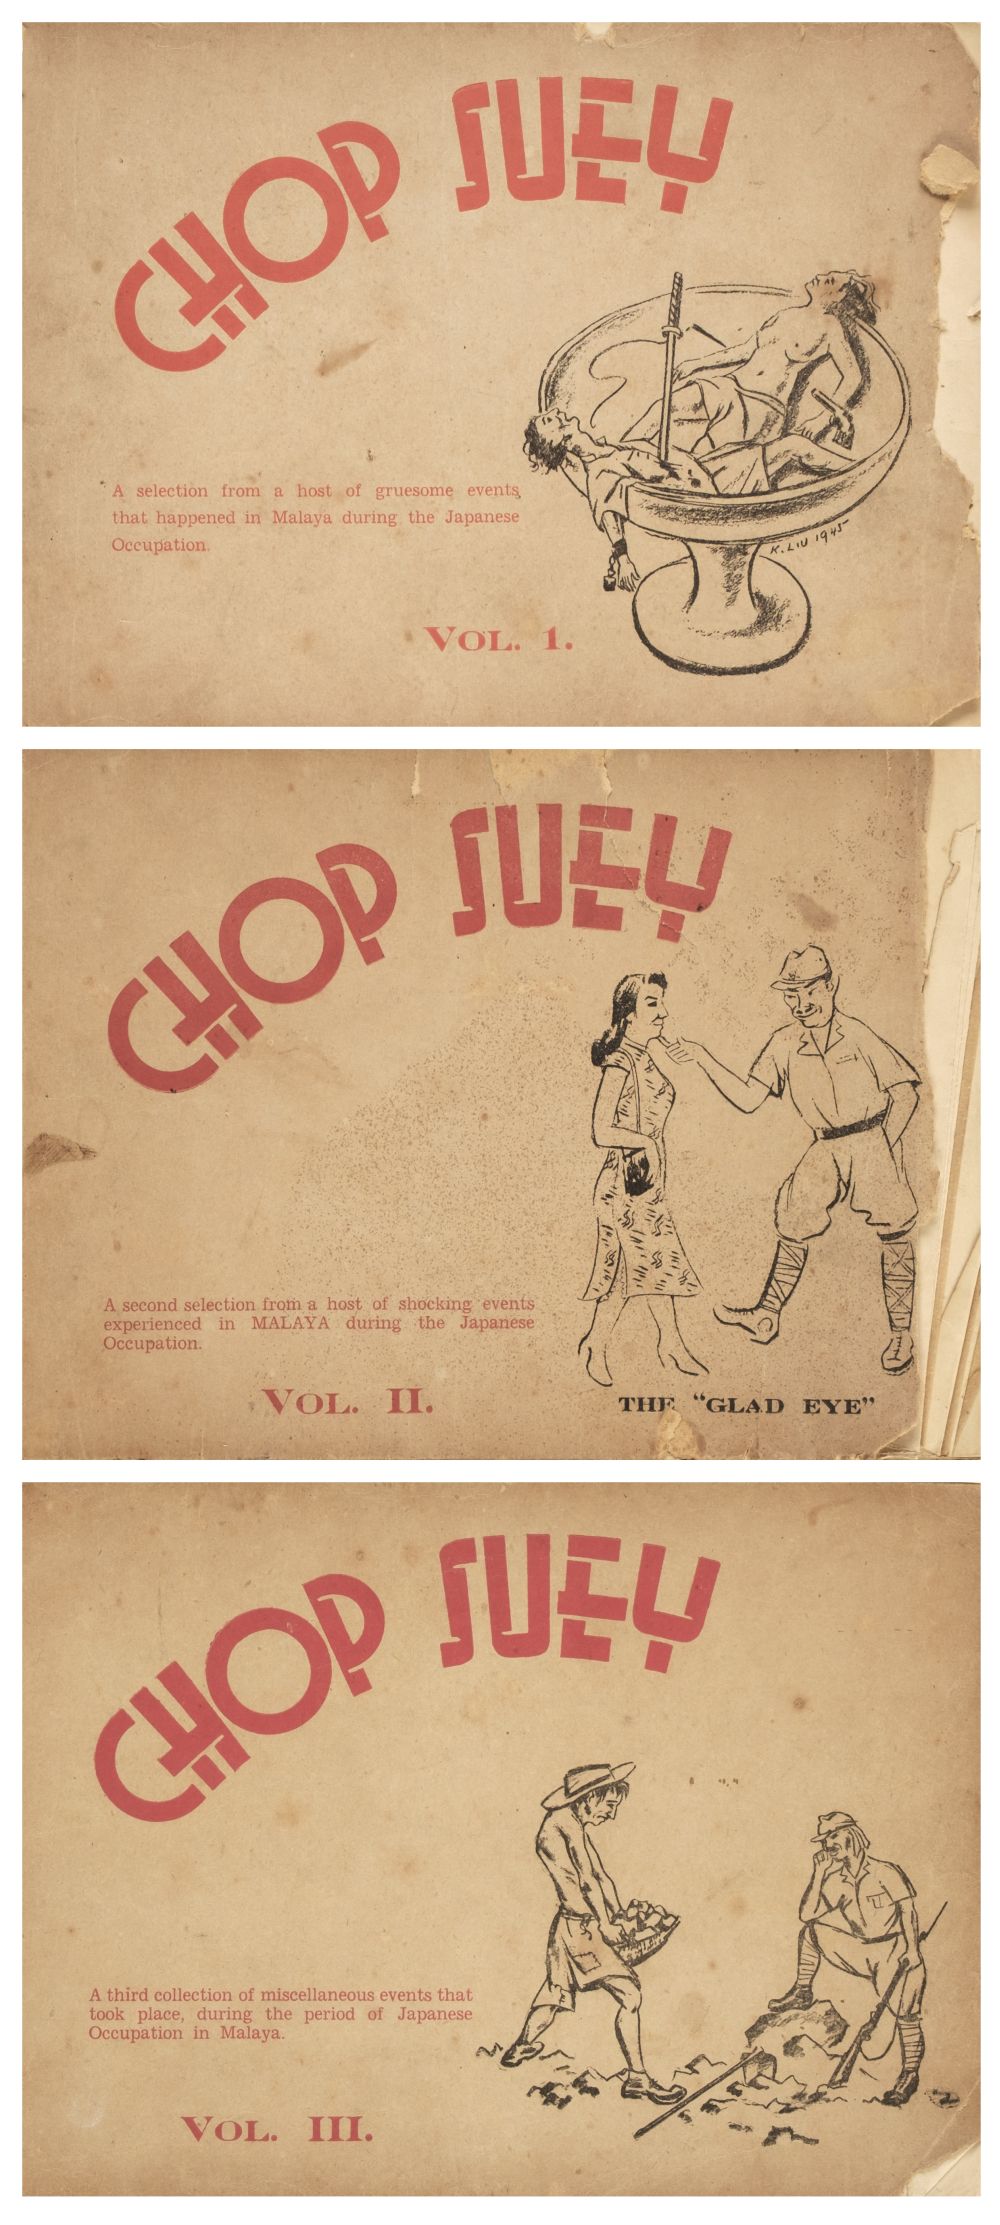 Kang (Liu). Chop Suey, 3 volumes, Singapore: Eastern Art Co., 1946